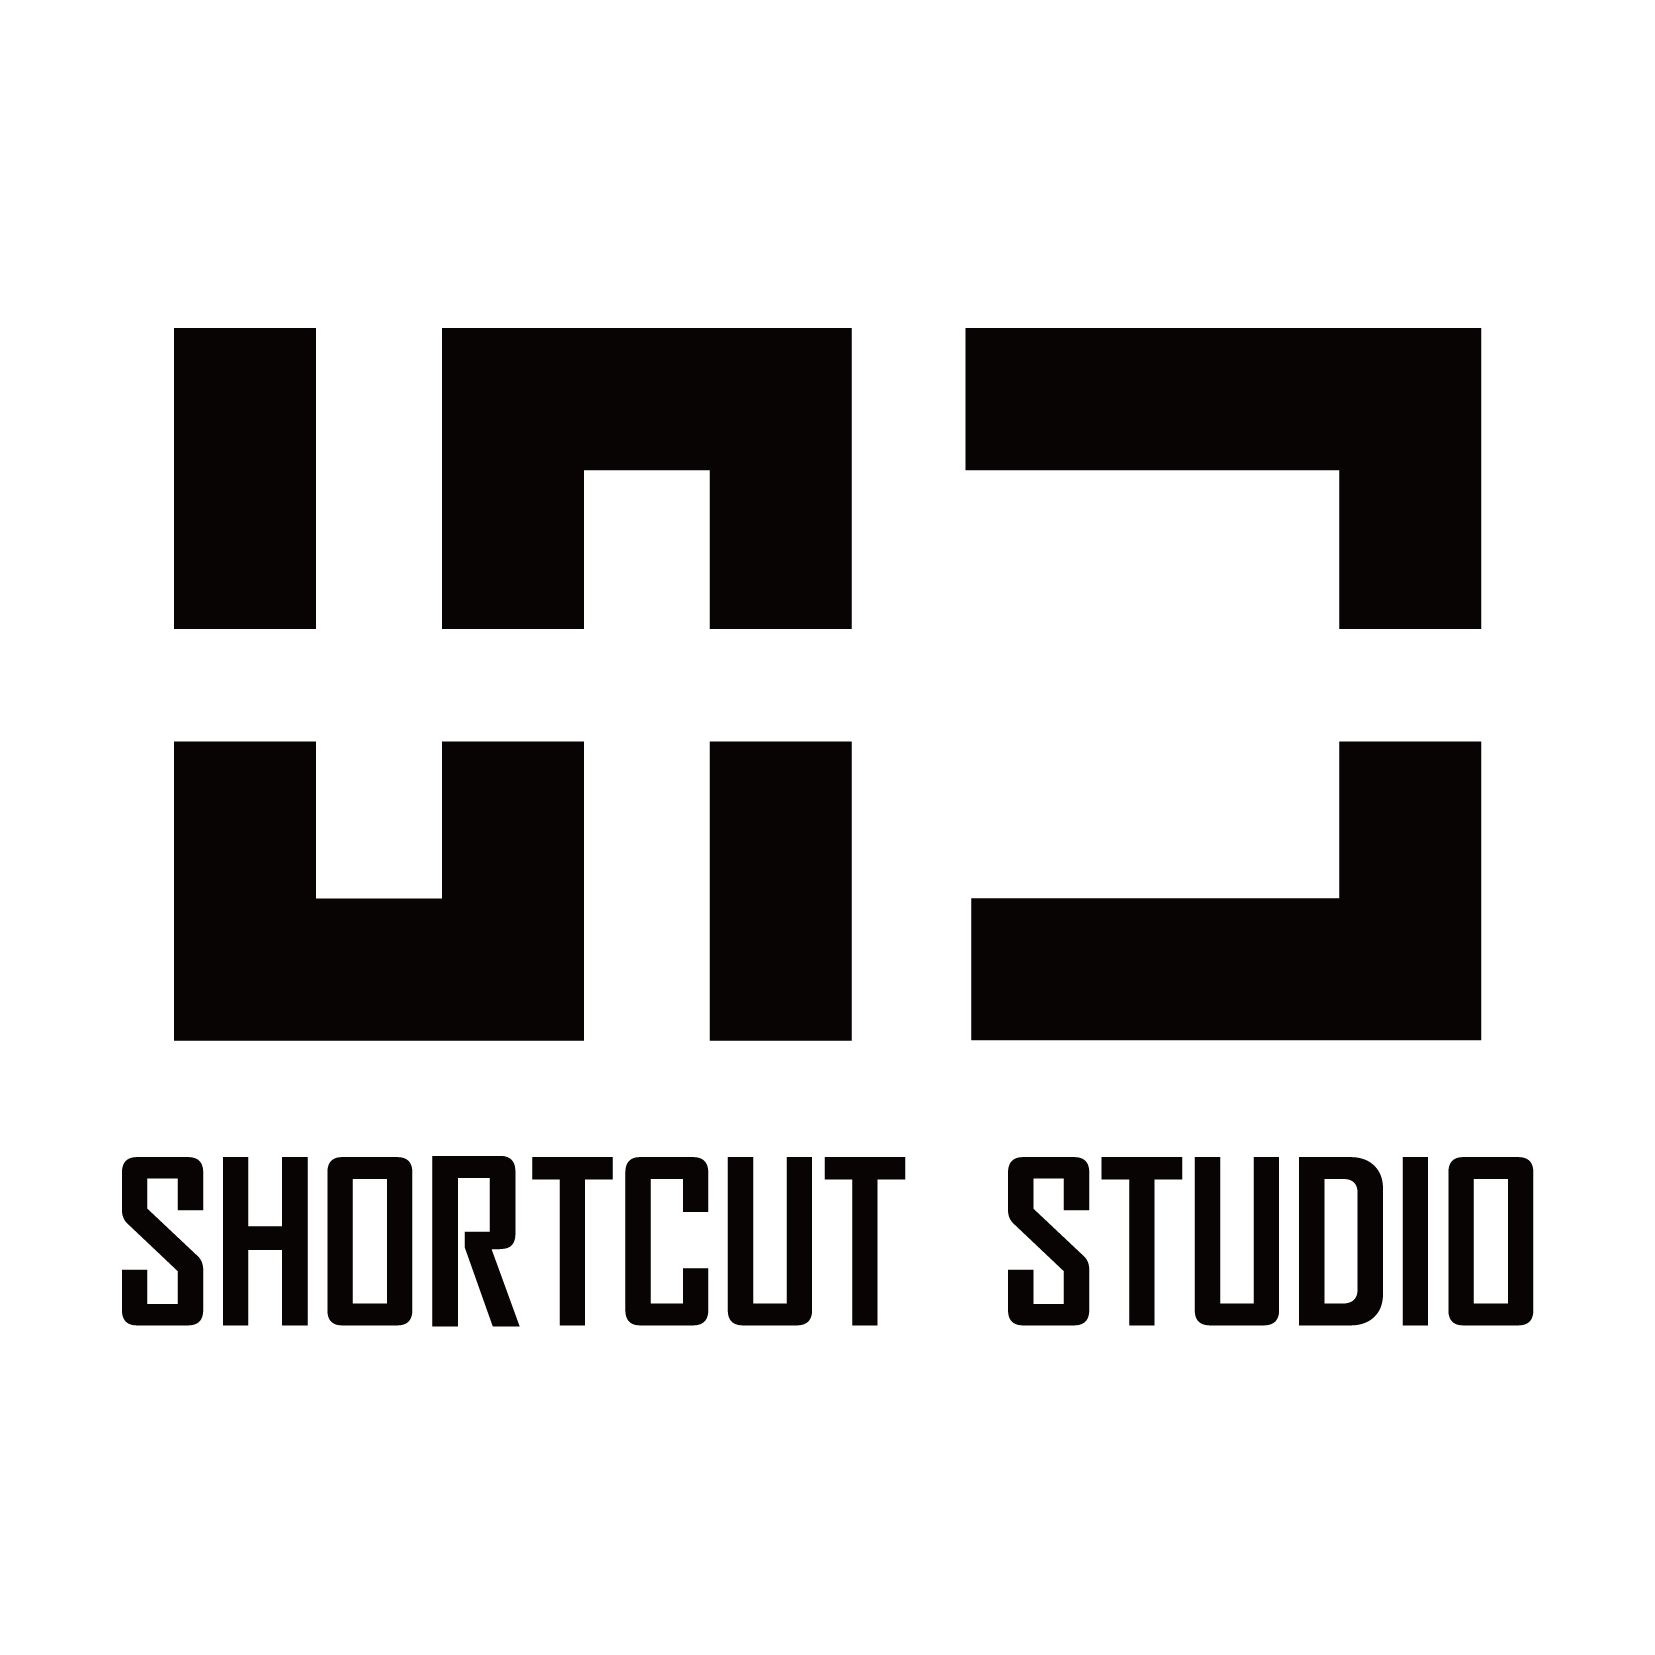 ShortCut